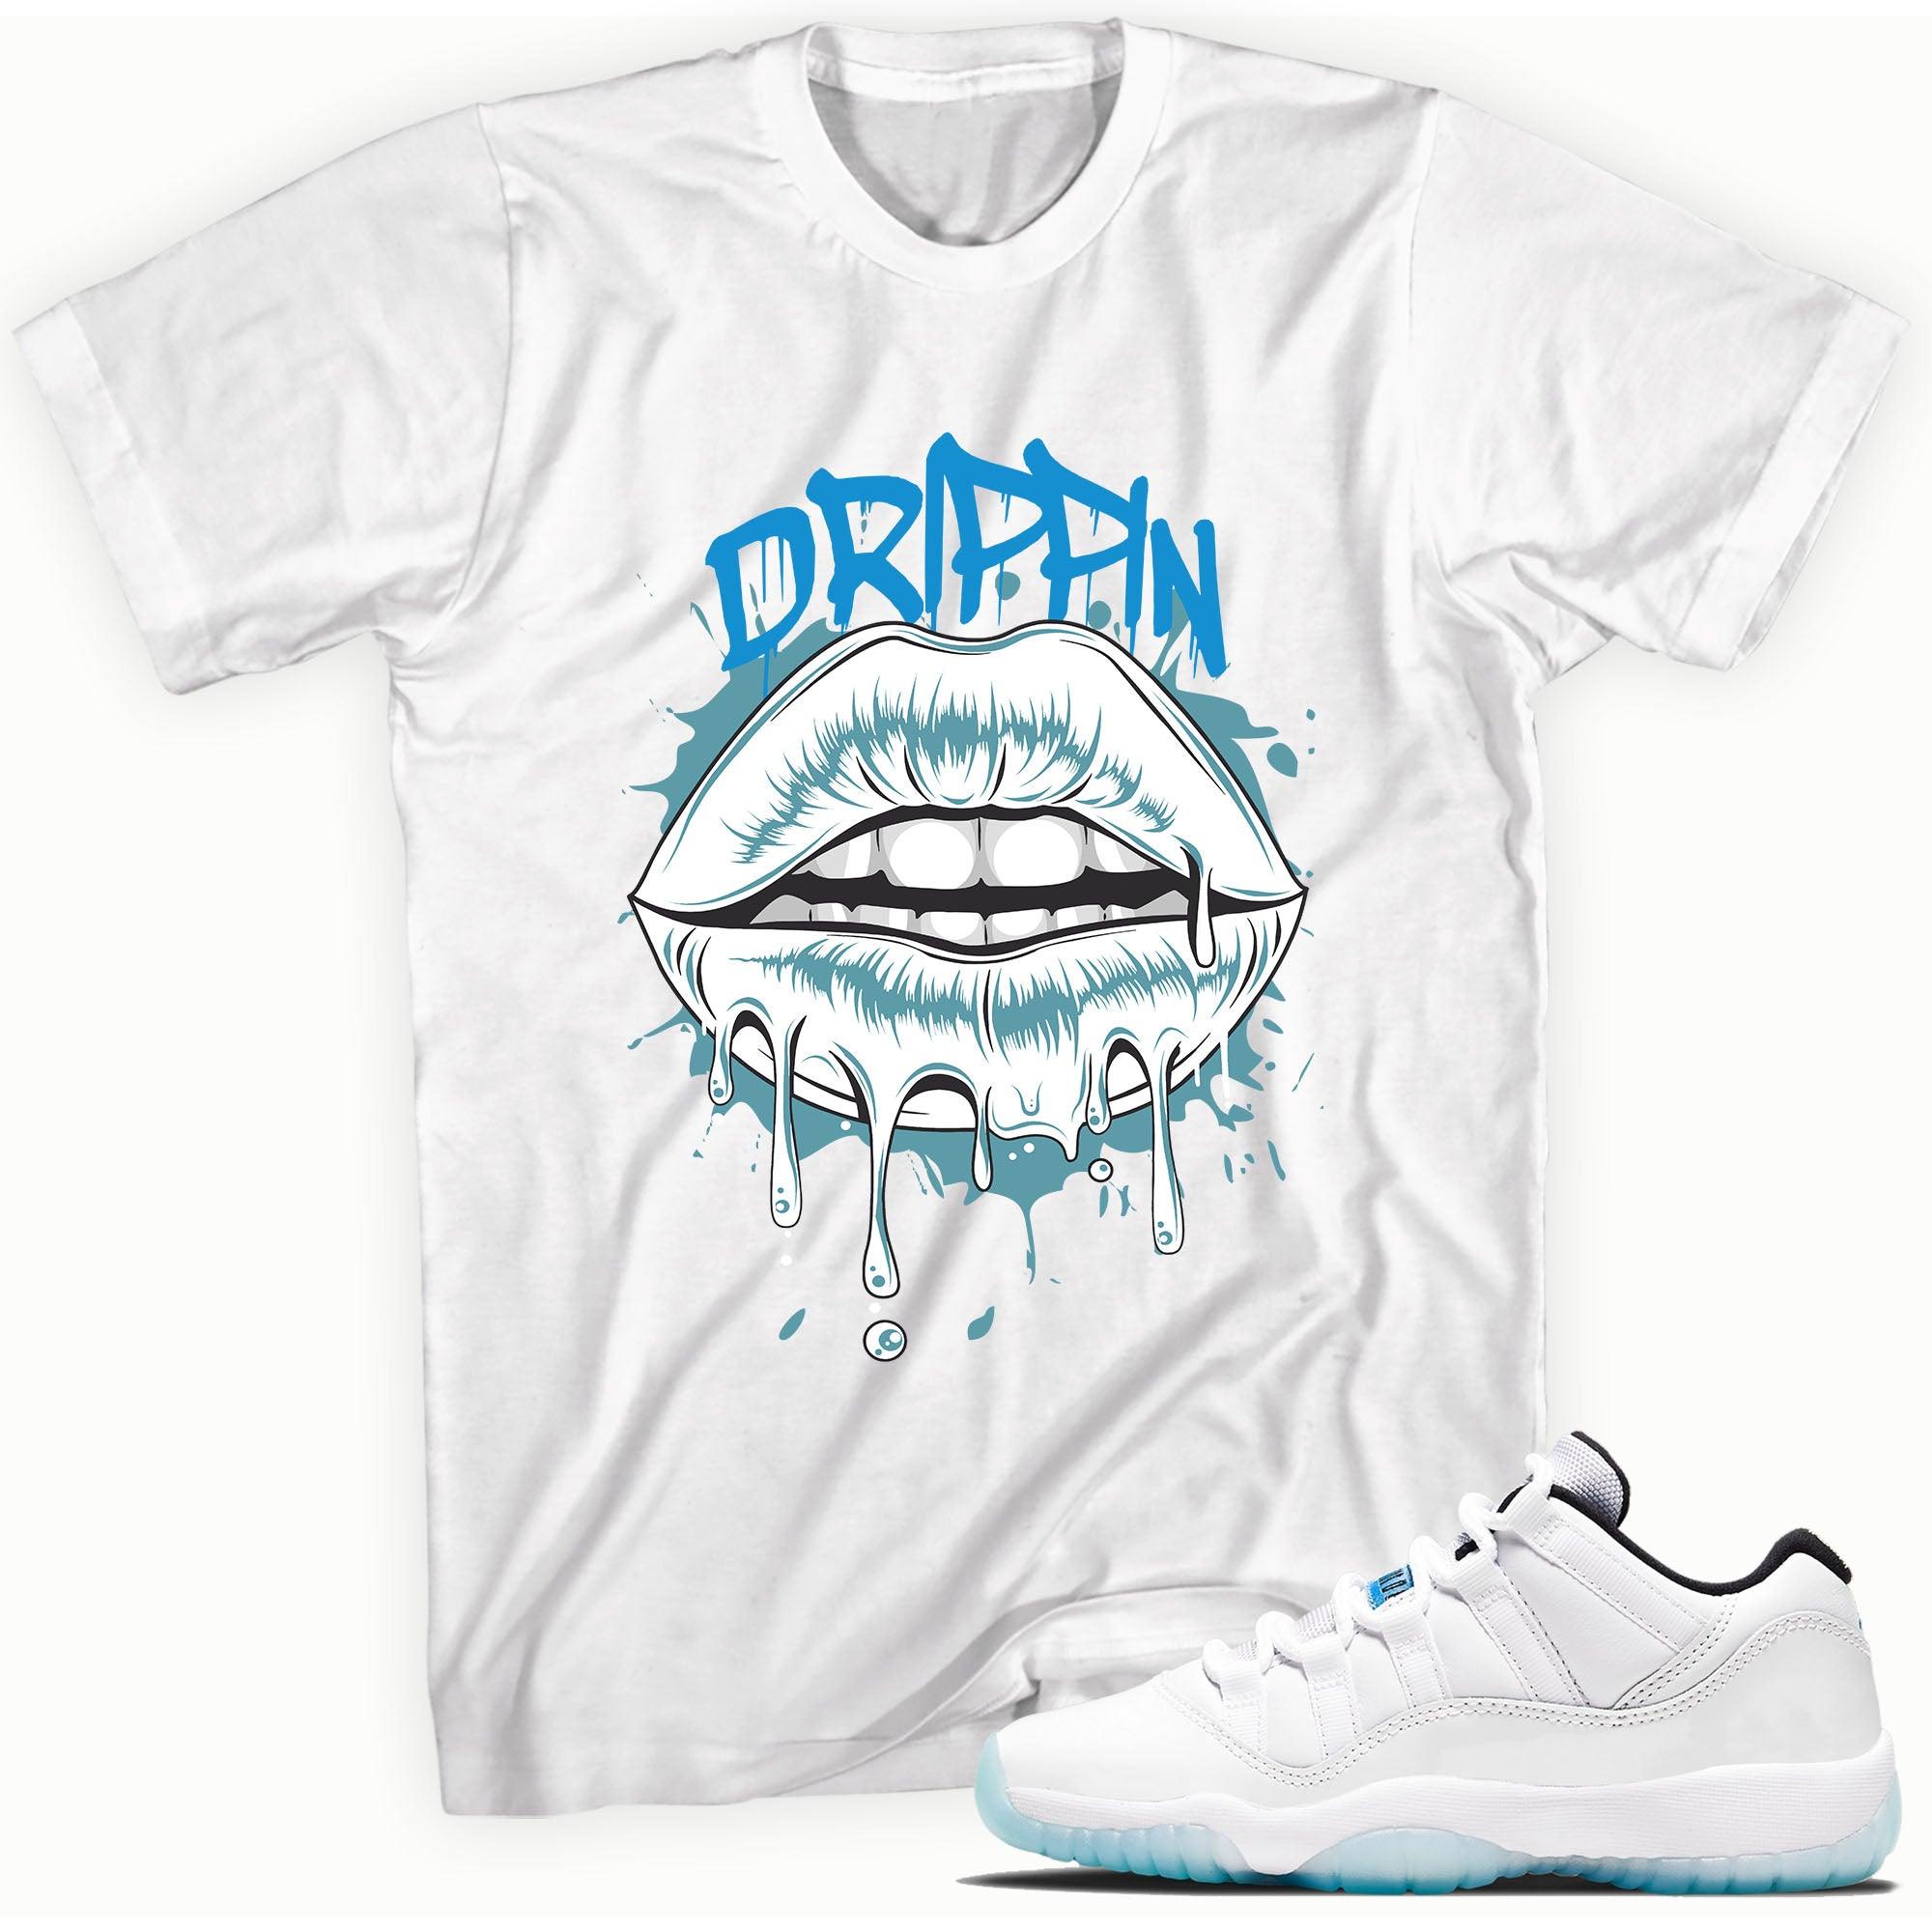 Drippin Lips Shirt AJ 11s Retro Low Legend Blue photo